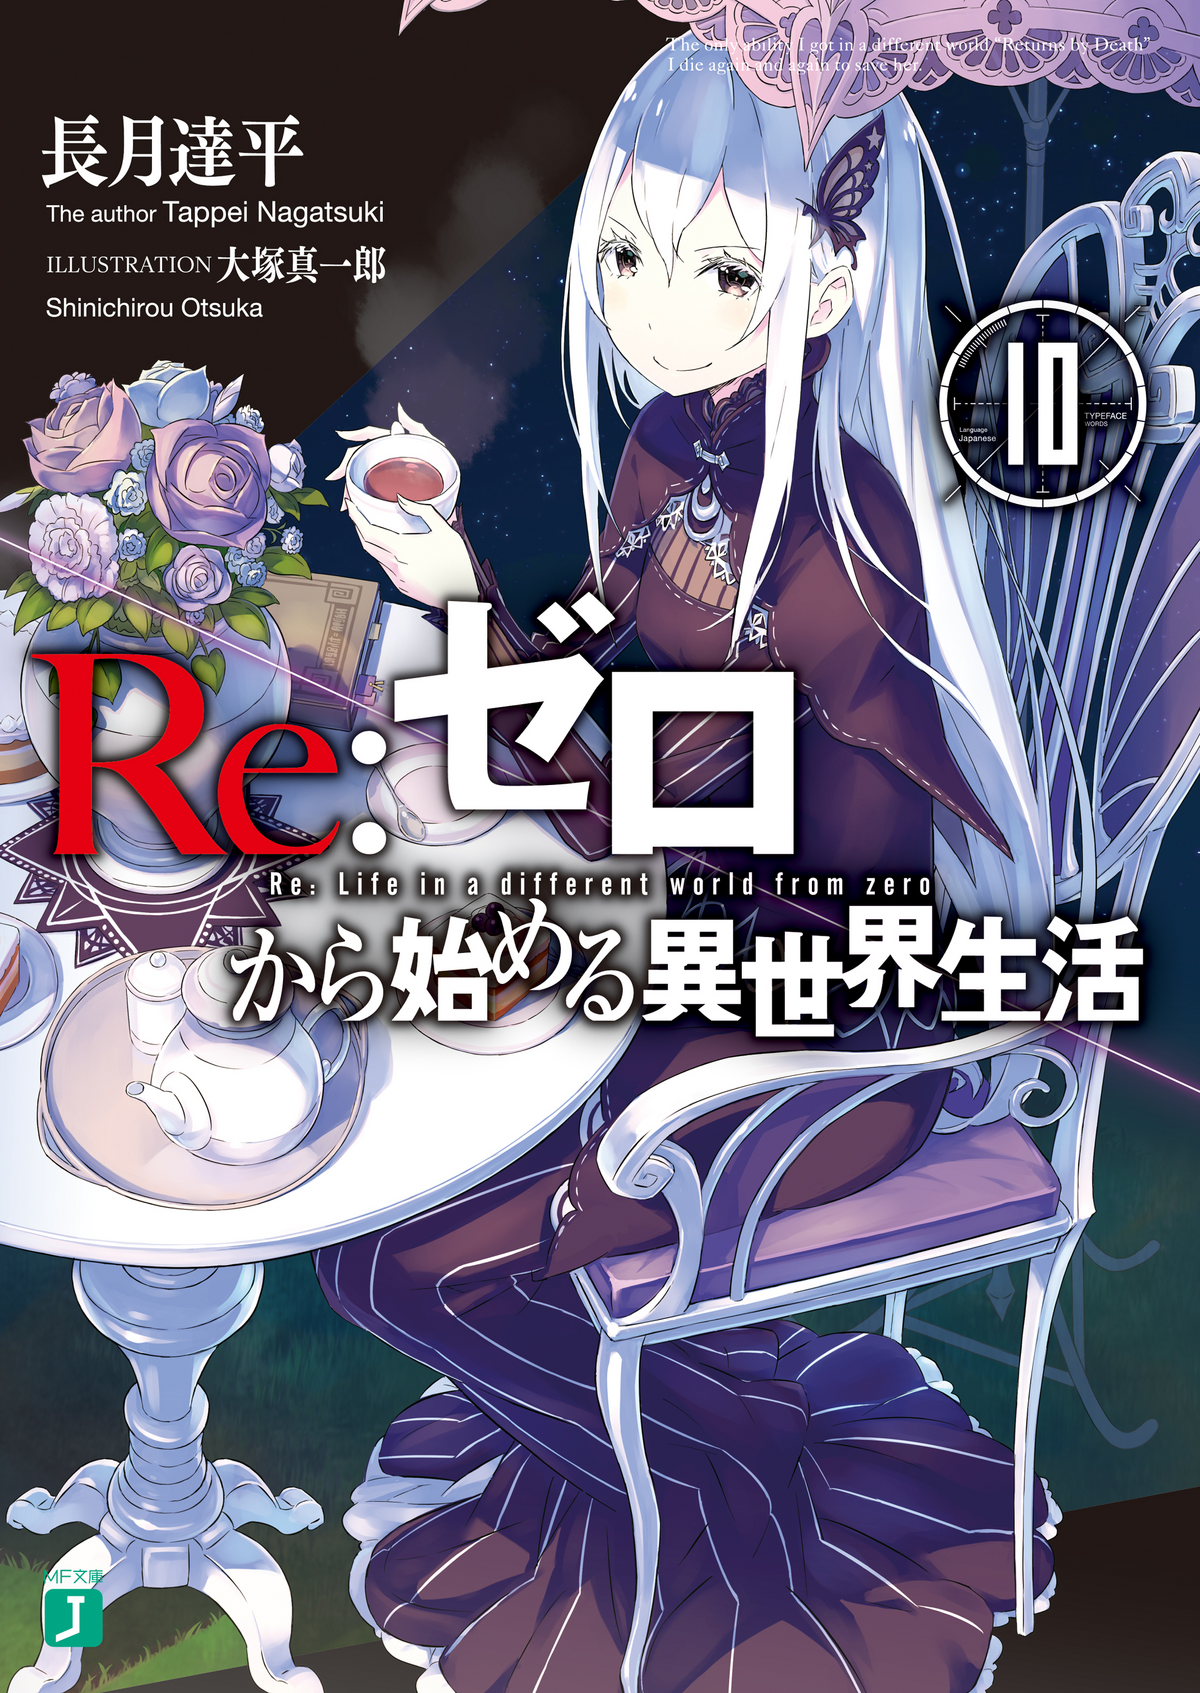 How to Read Ahead in Re:Zero (Web Novel/Light Novel) 